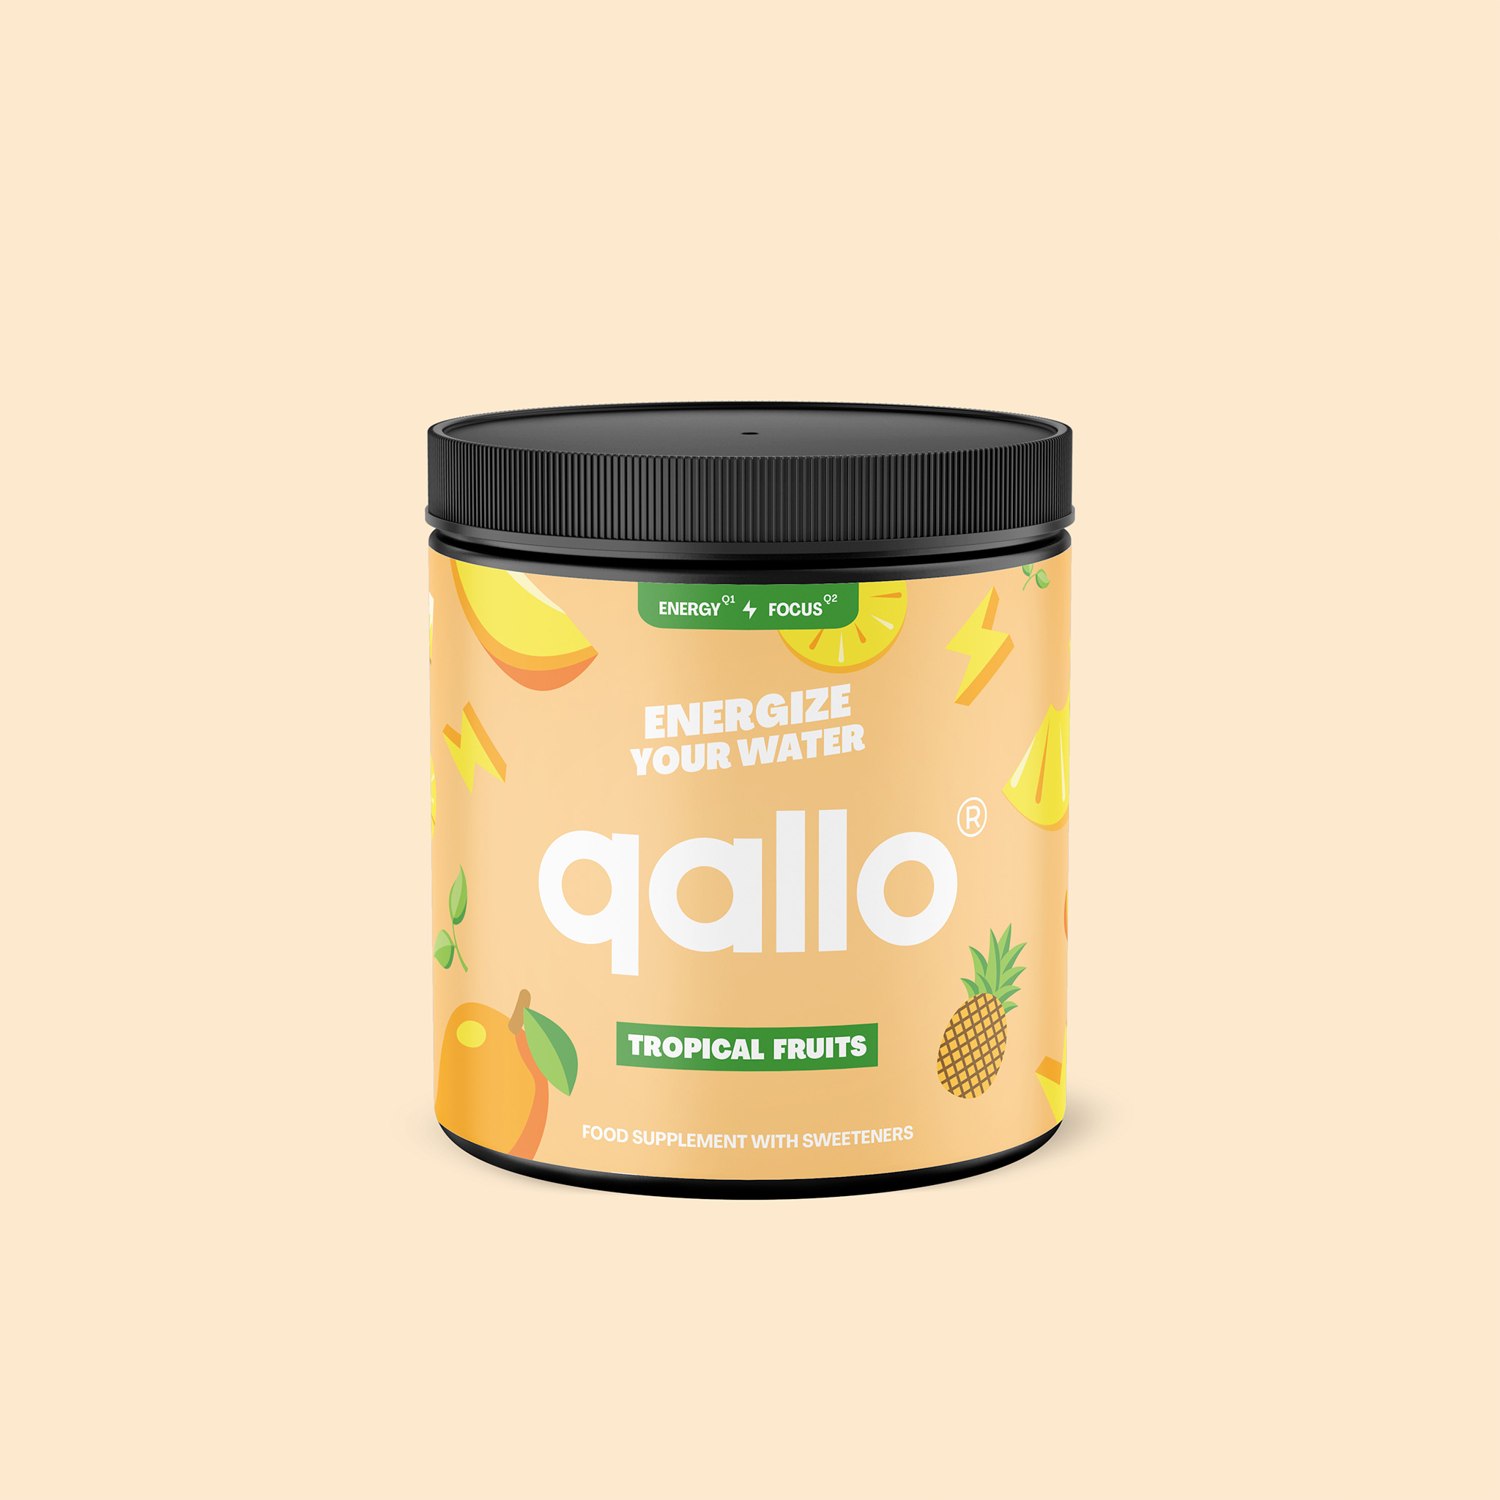 Qallo_Tropical fruits